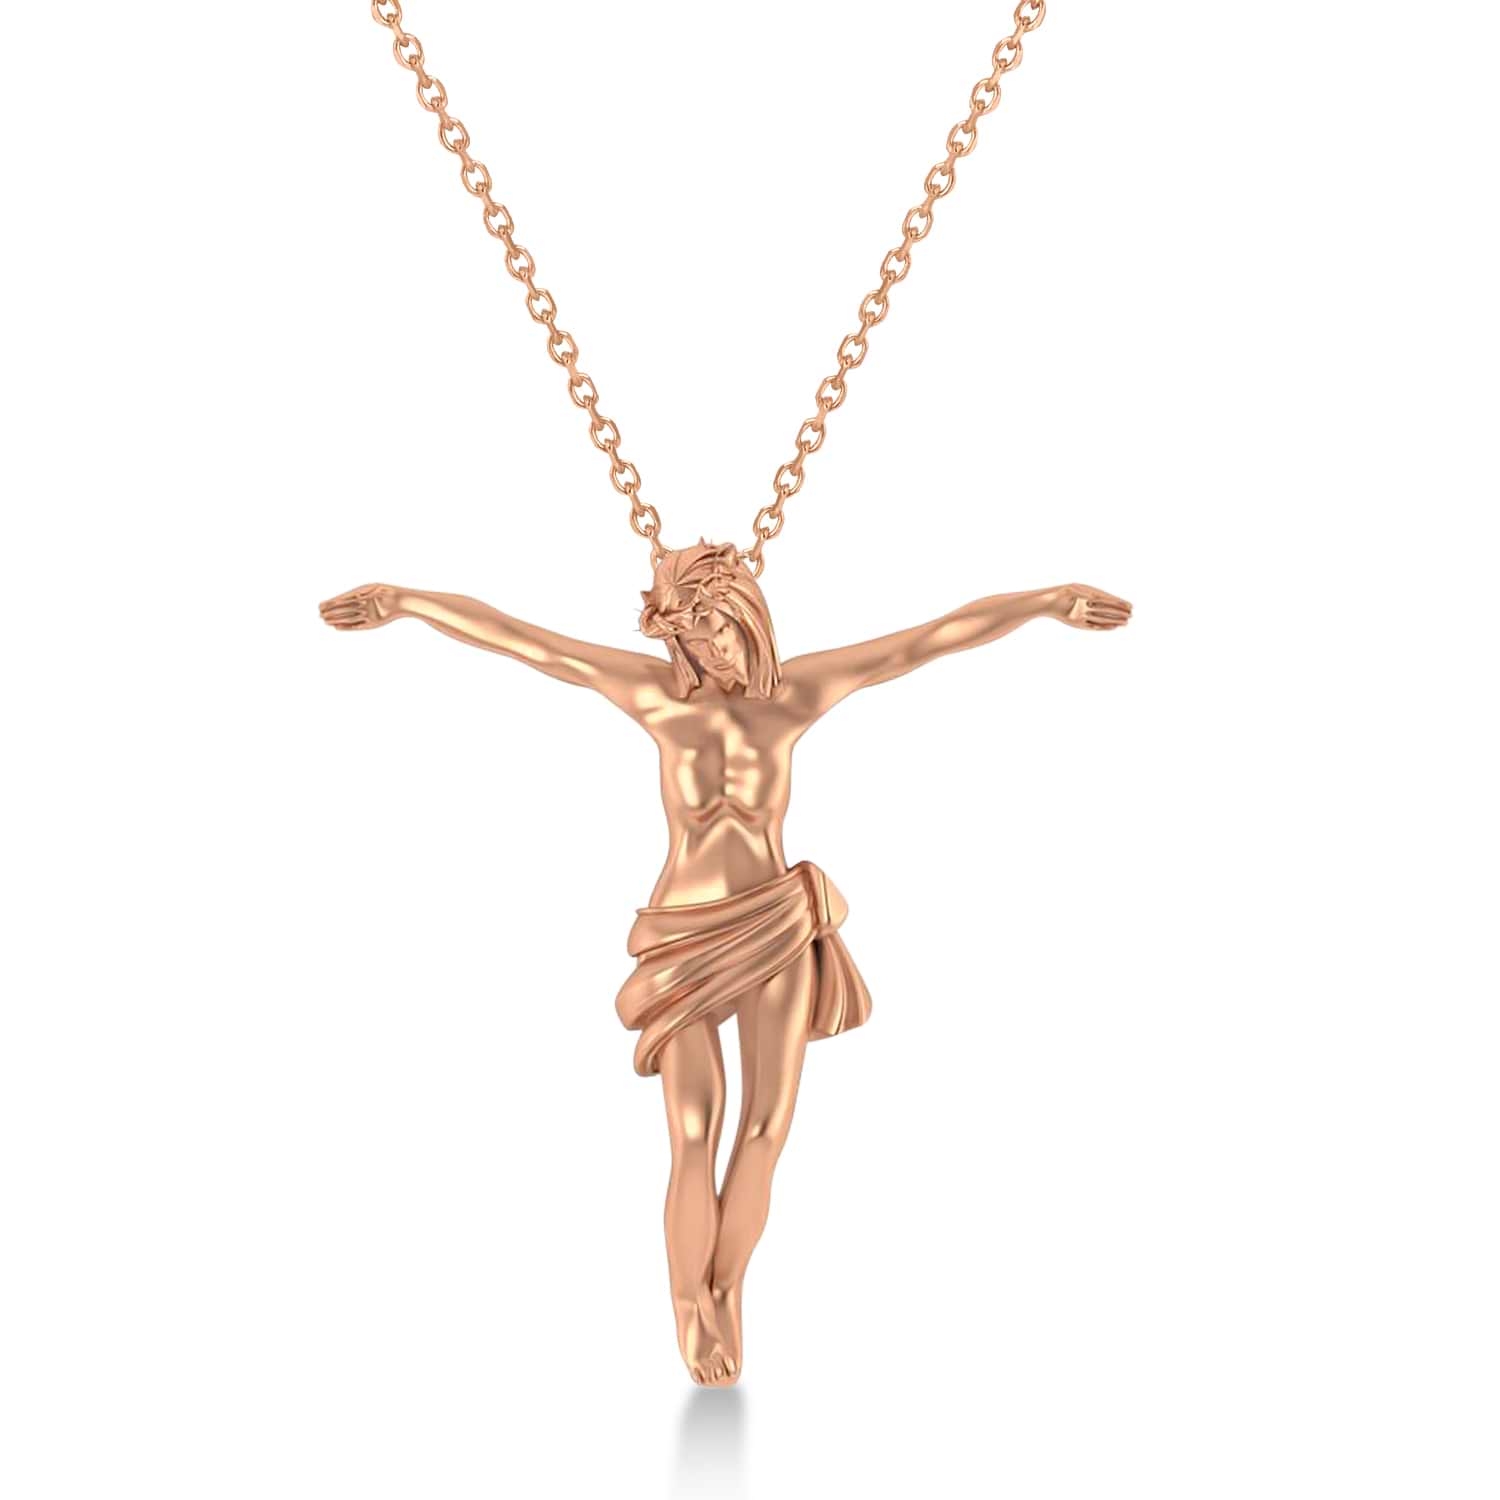 Crucified Jesus Christ Pendant Necklace 14k Rose Gold